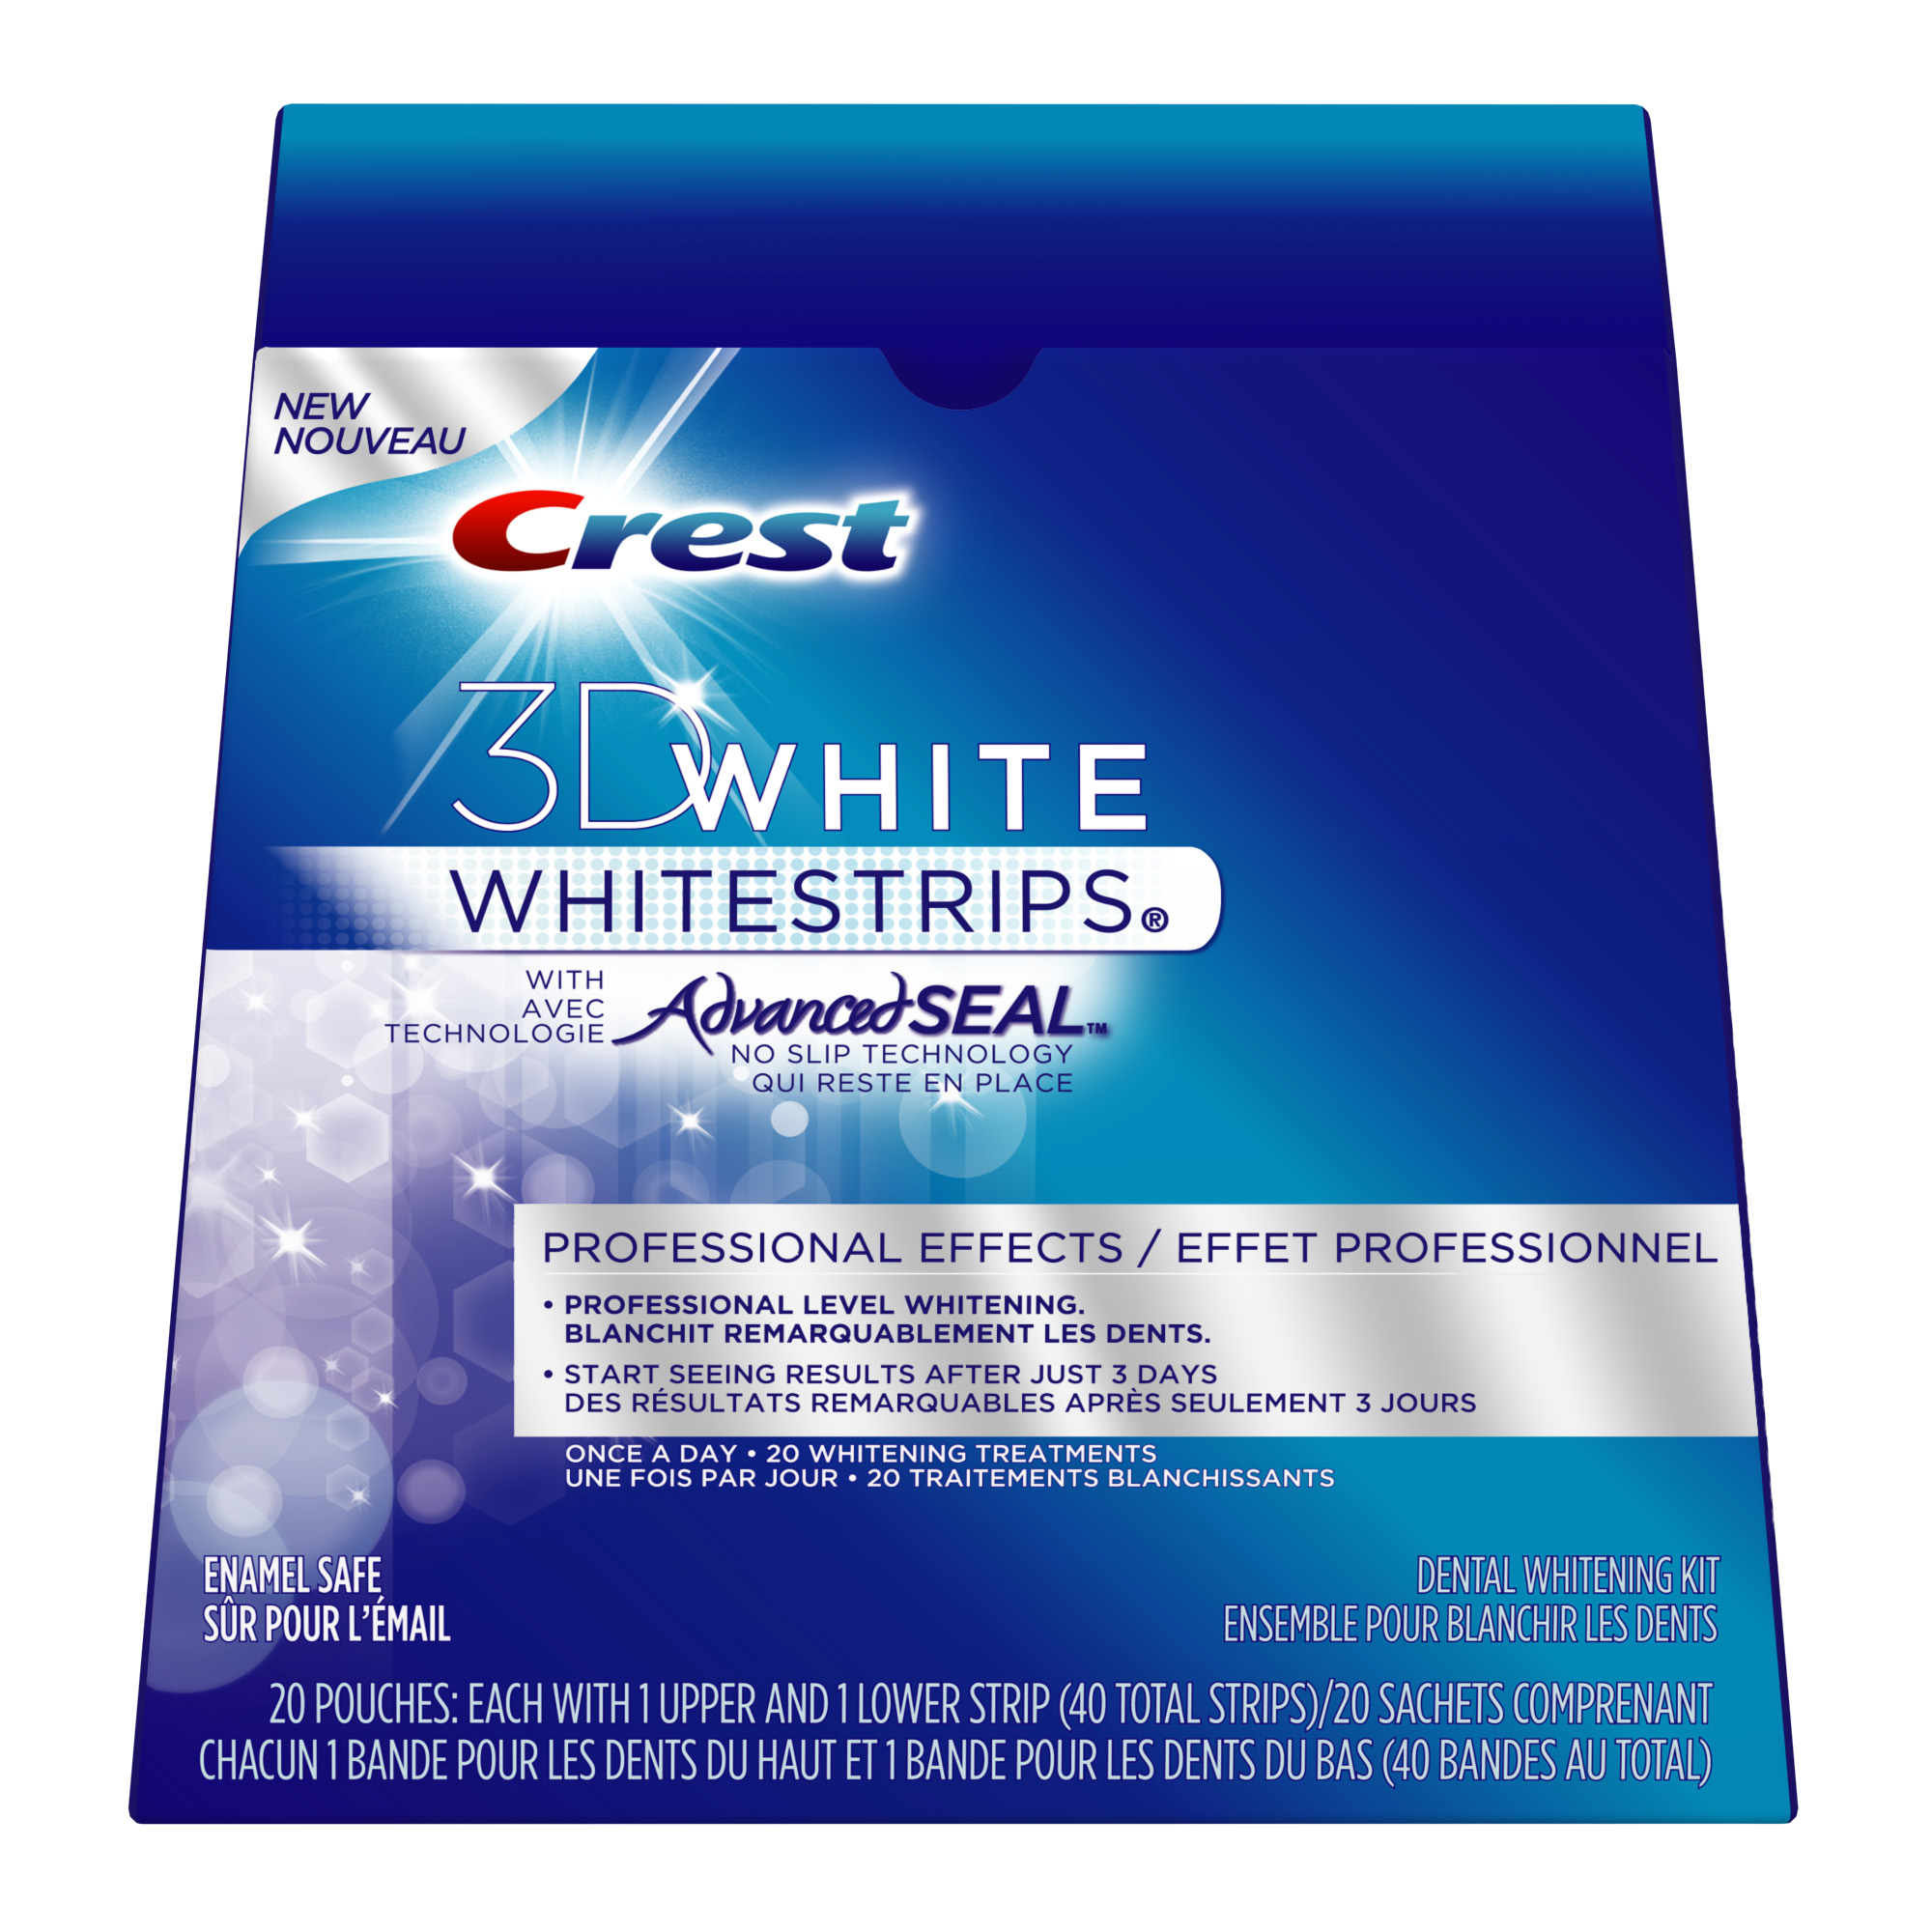 Crest 3d White Whitestrips. Crest 3d White professional Effects. Полоски для отбеливания зубов. Полоски для отбеливания зубов Crest.